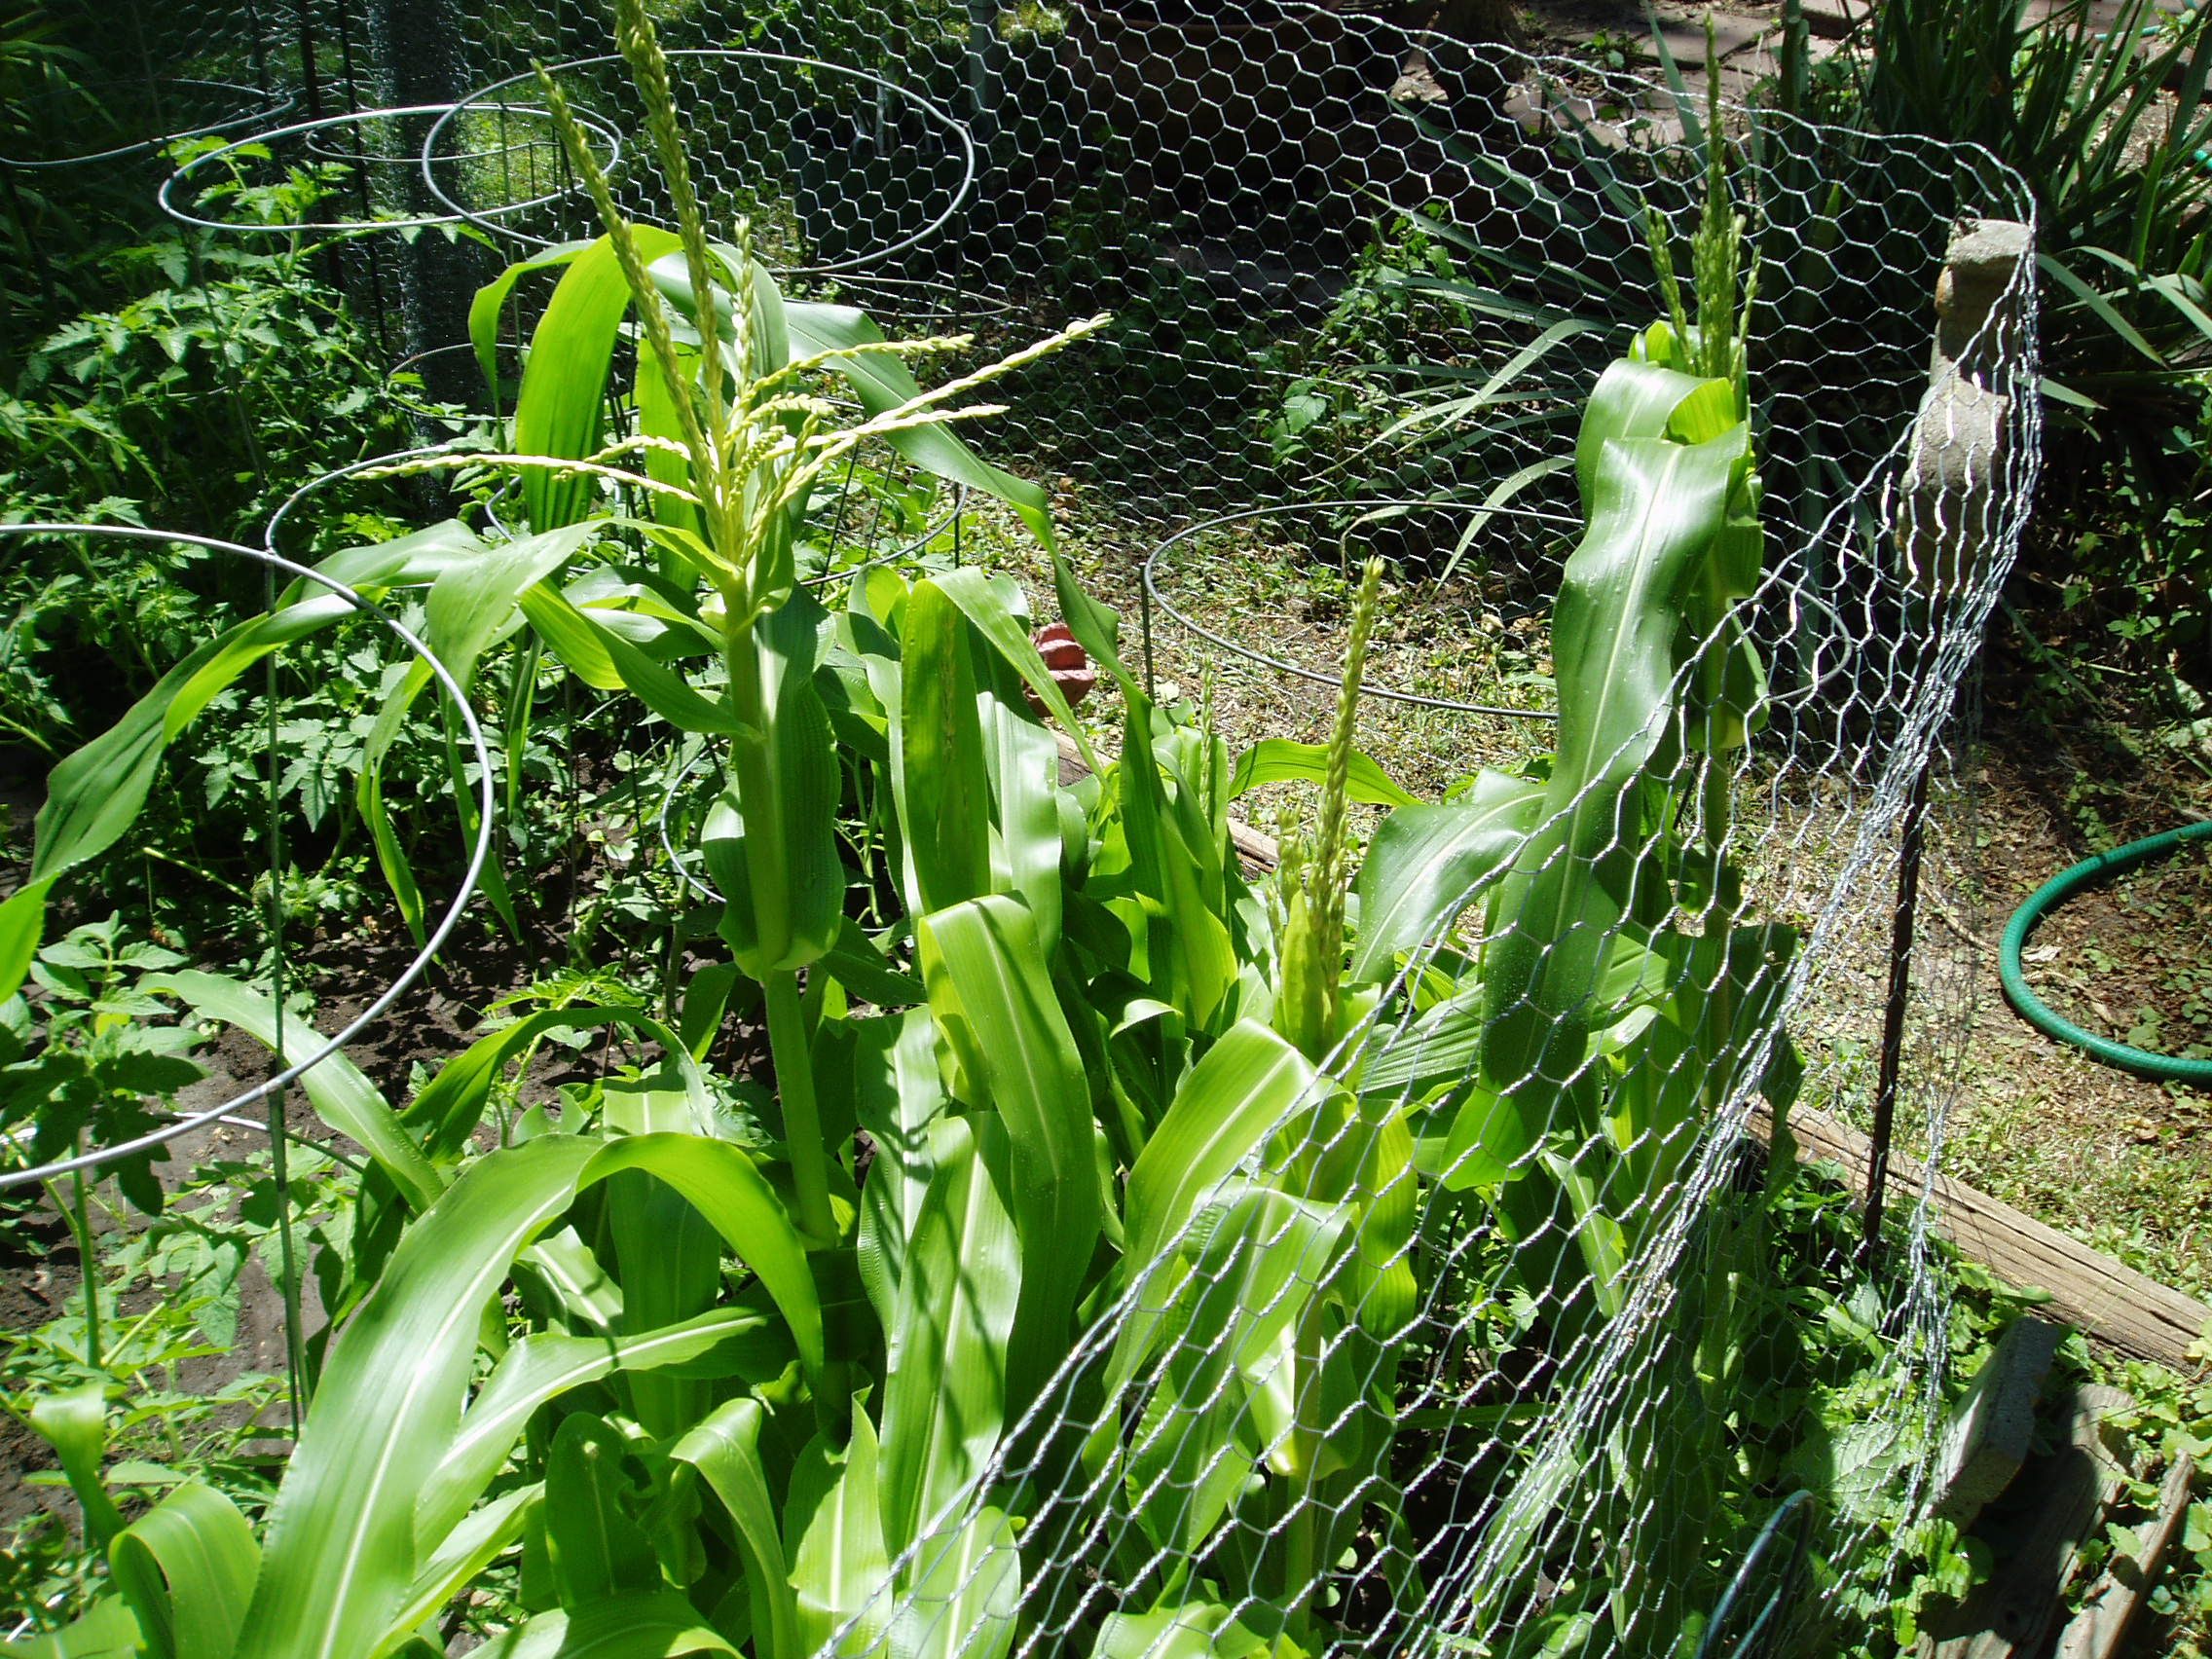 Garden corn tassels 6-24-20 005.JPG